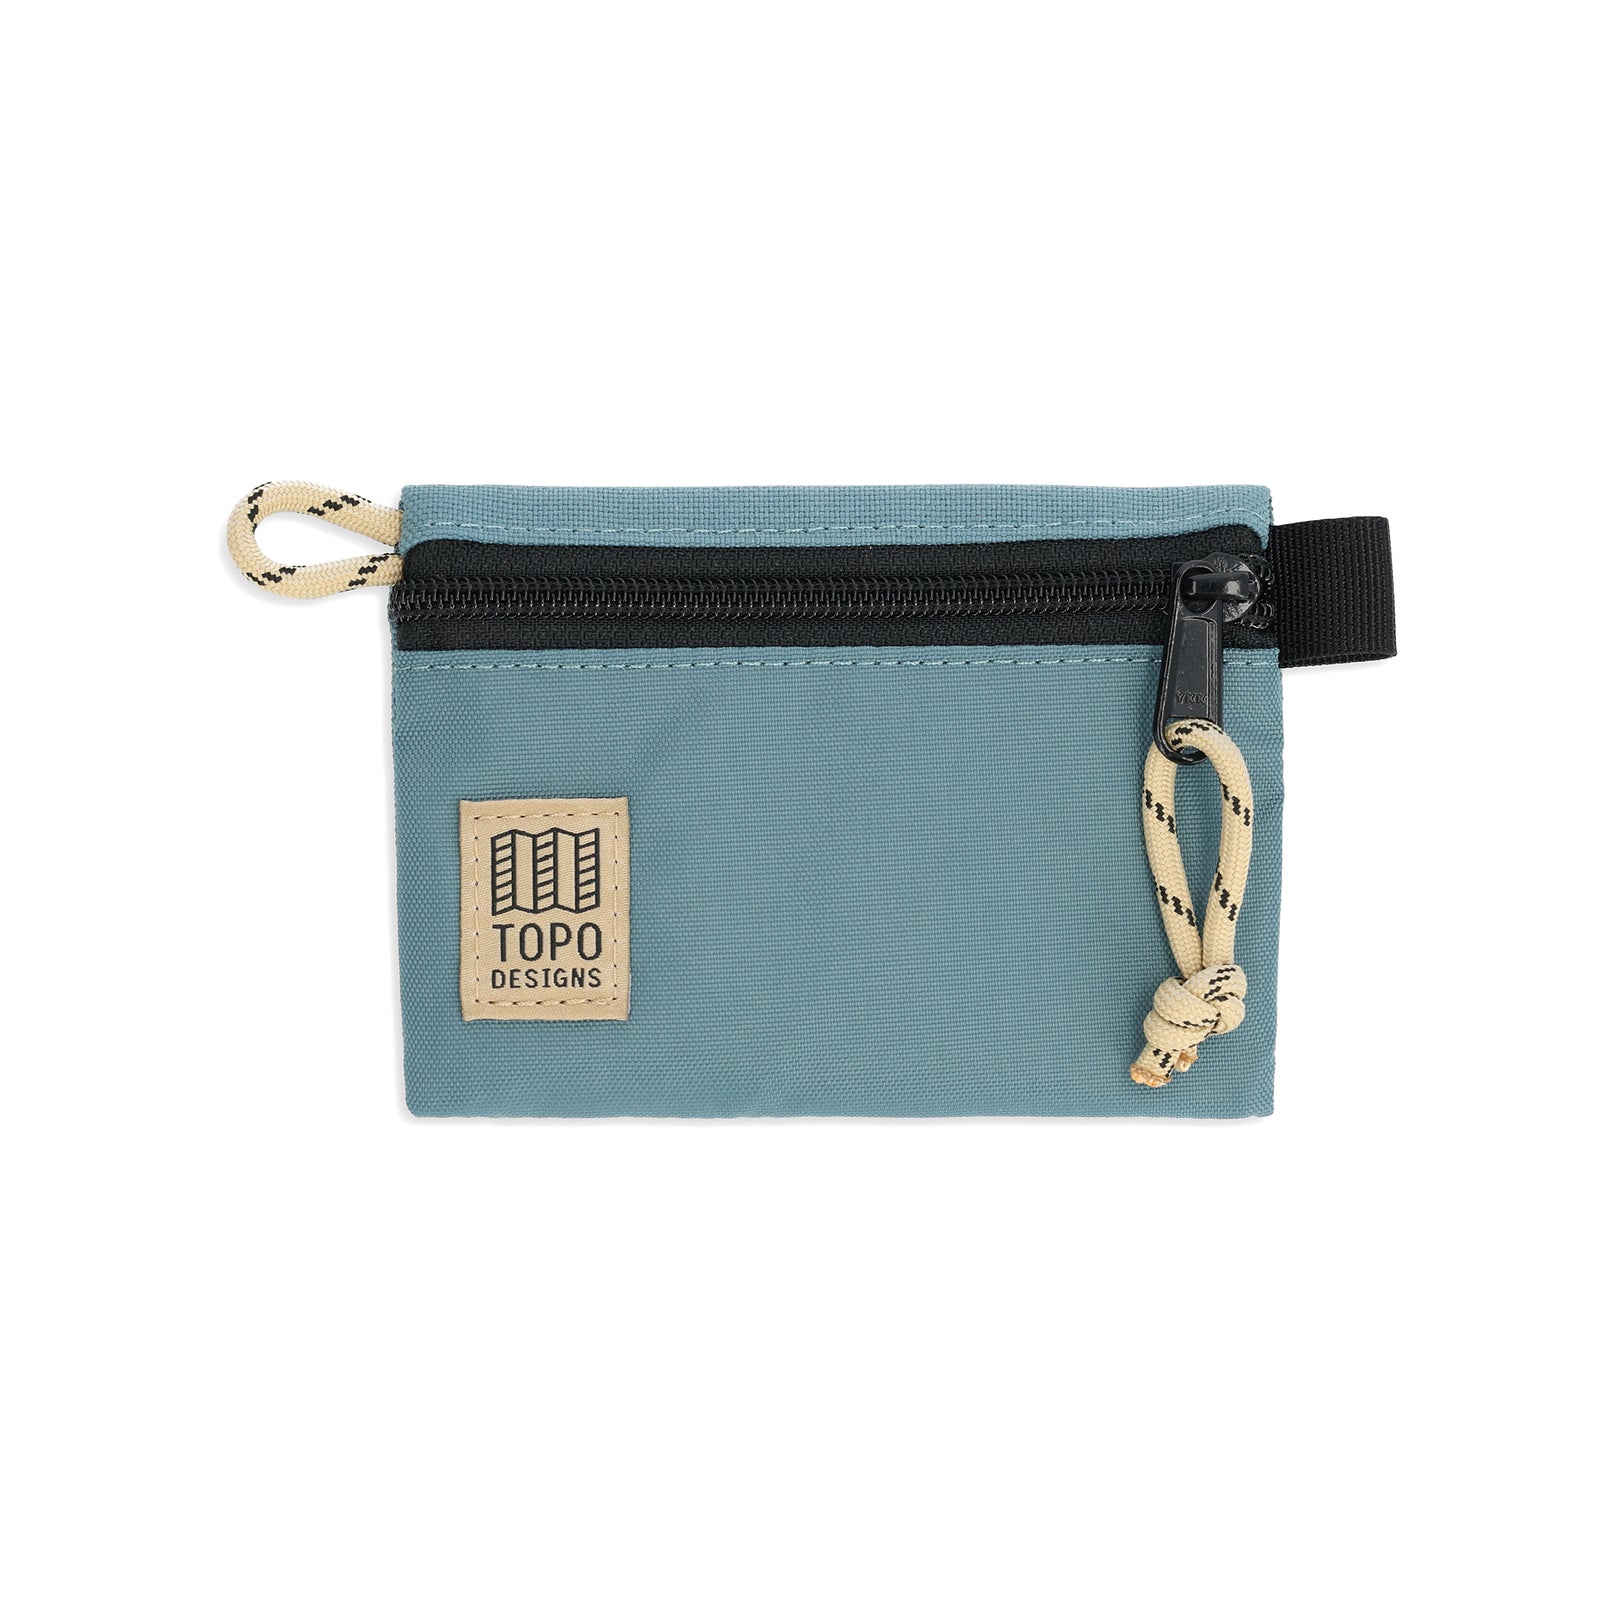 Front View of Topo Designs Accessory Bags in "Micro" "Sea Pine"